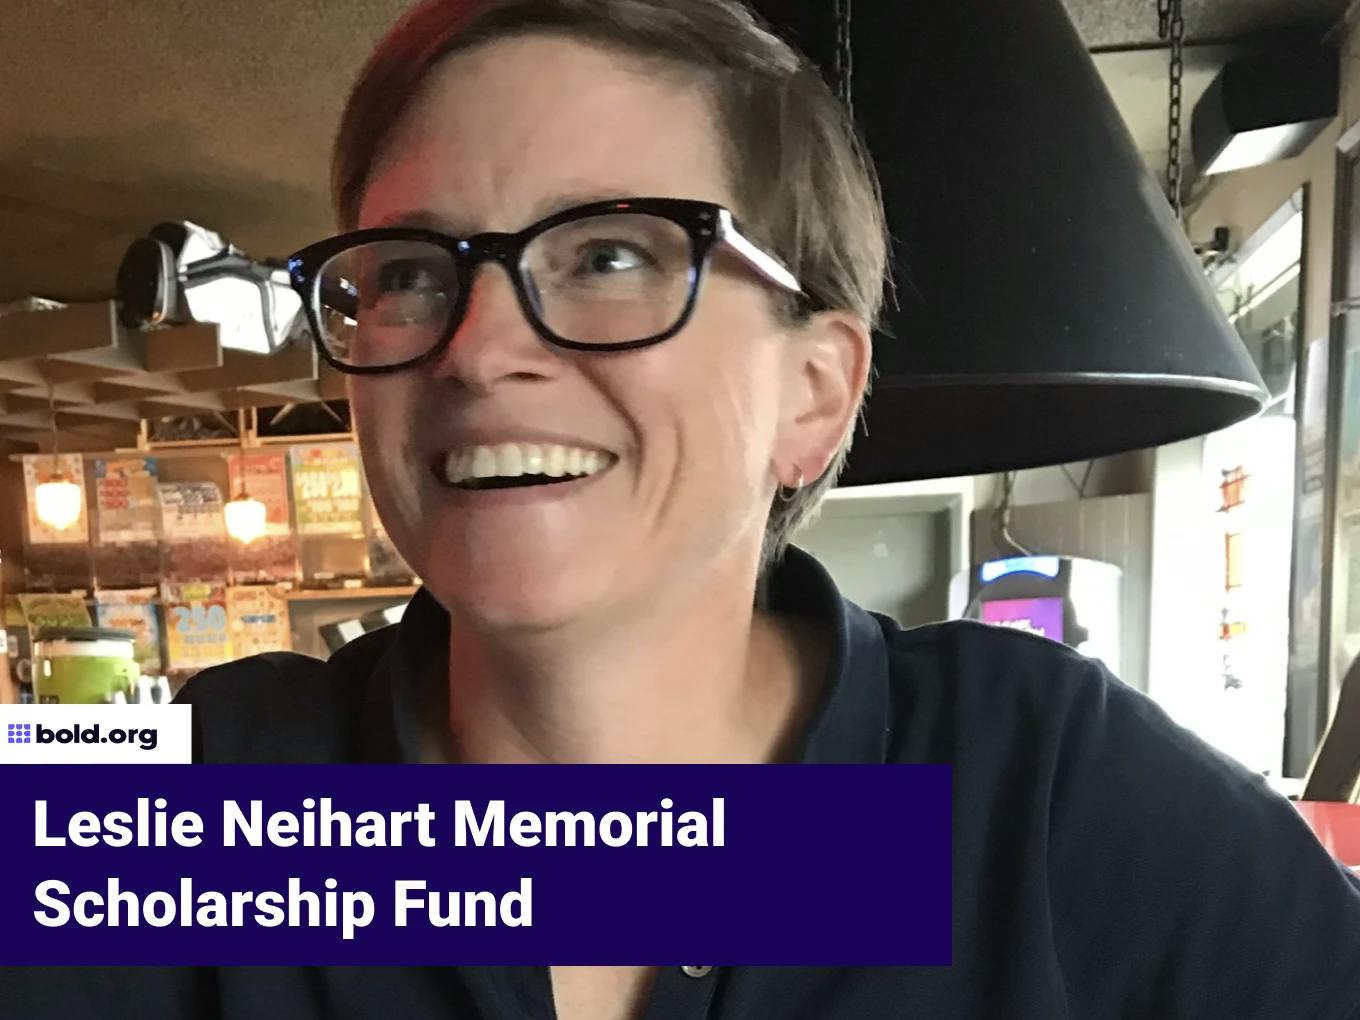 Leslie Neihart Memorial Scholarship Fund